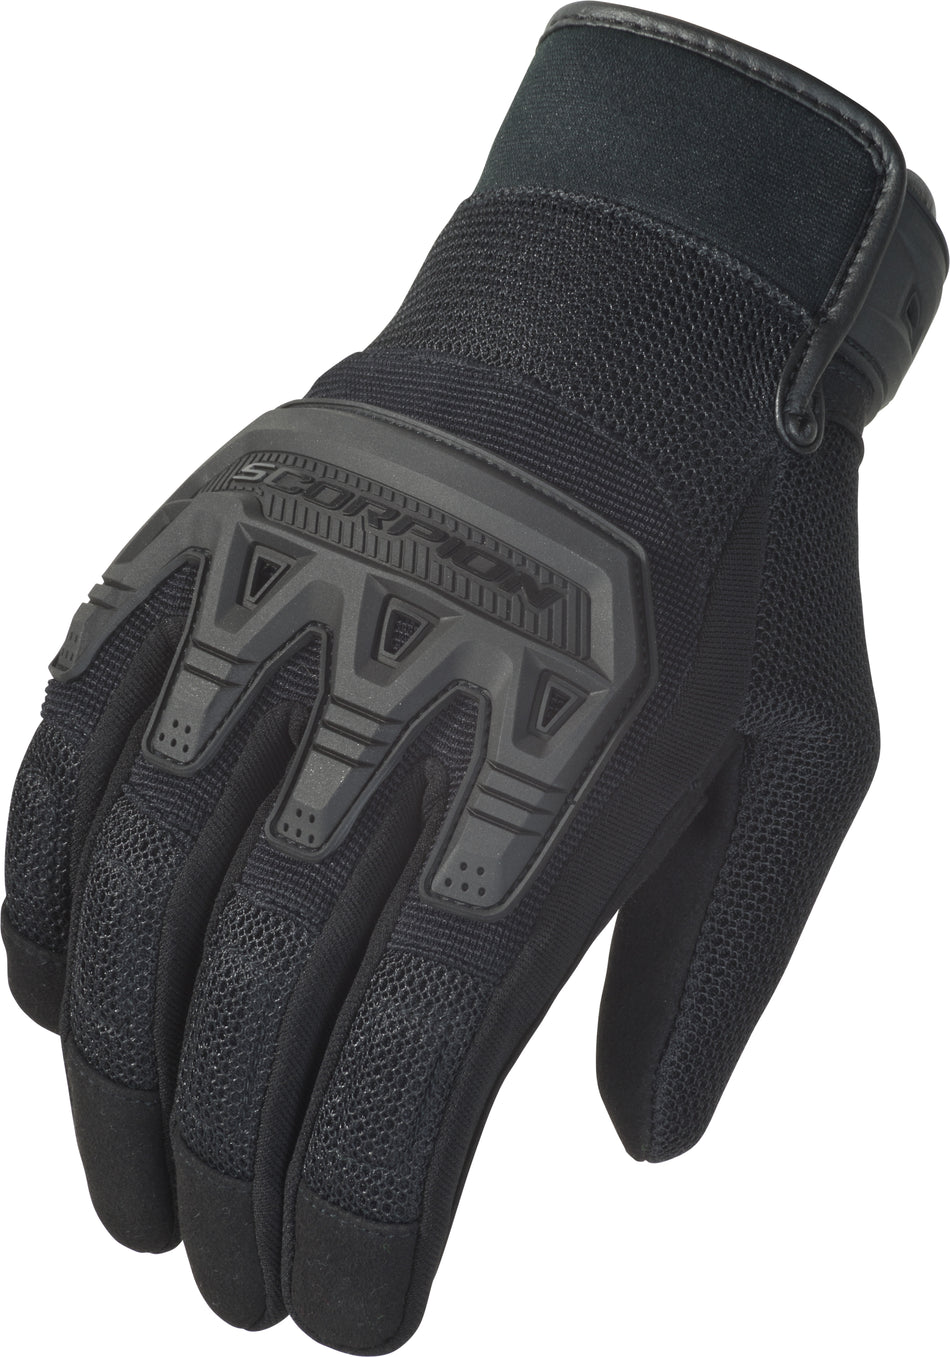 SCORPION EXO Covert Tactical Gloves Black Xl G32-036